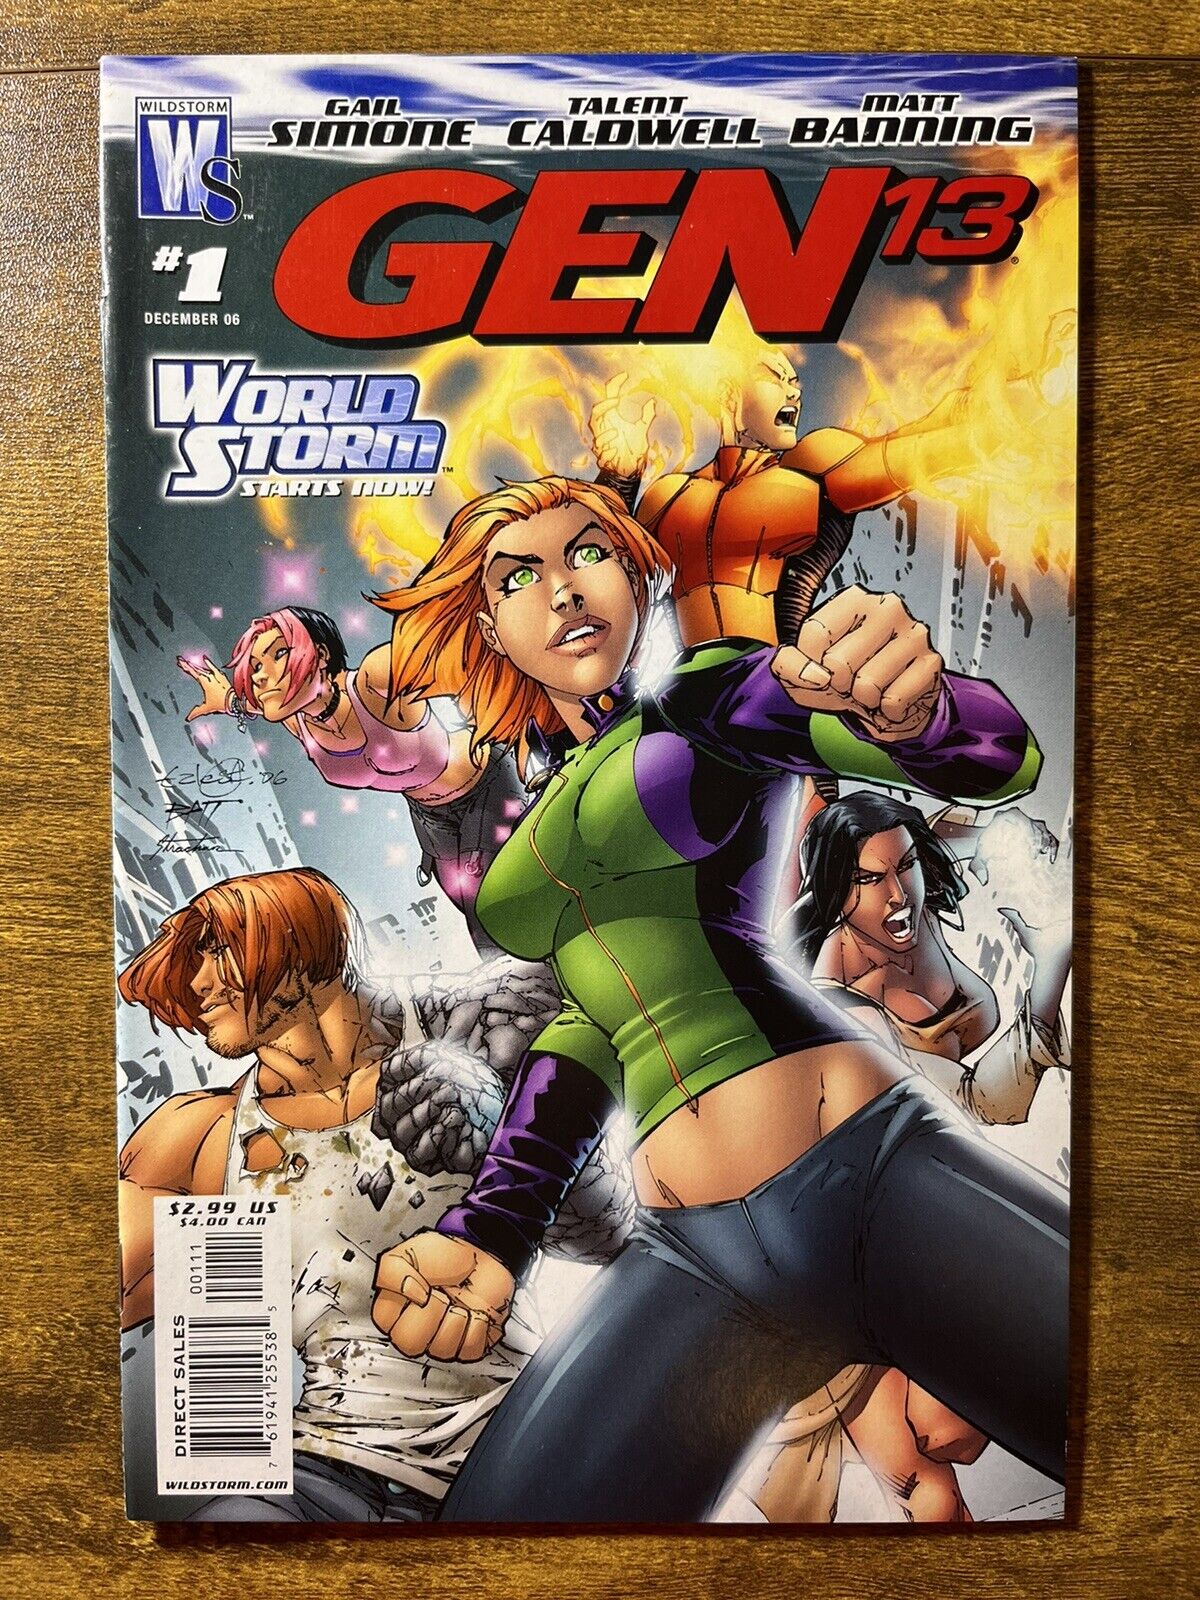 GEN 13 #1 GORGEOUS TALENT CALDWELL COVER FAIRCHILD DC WILDSTORM 2006 B